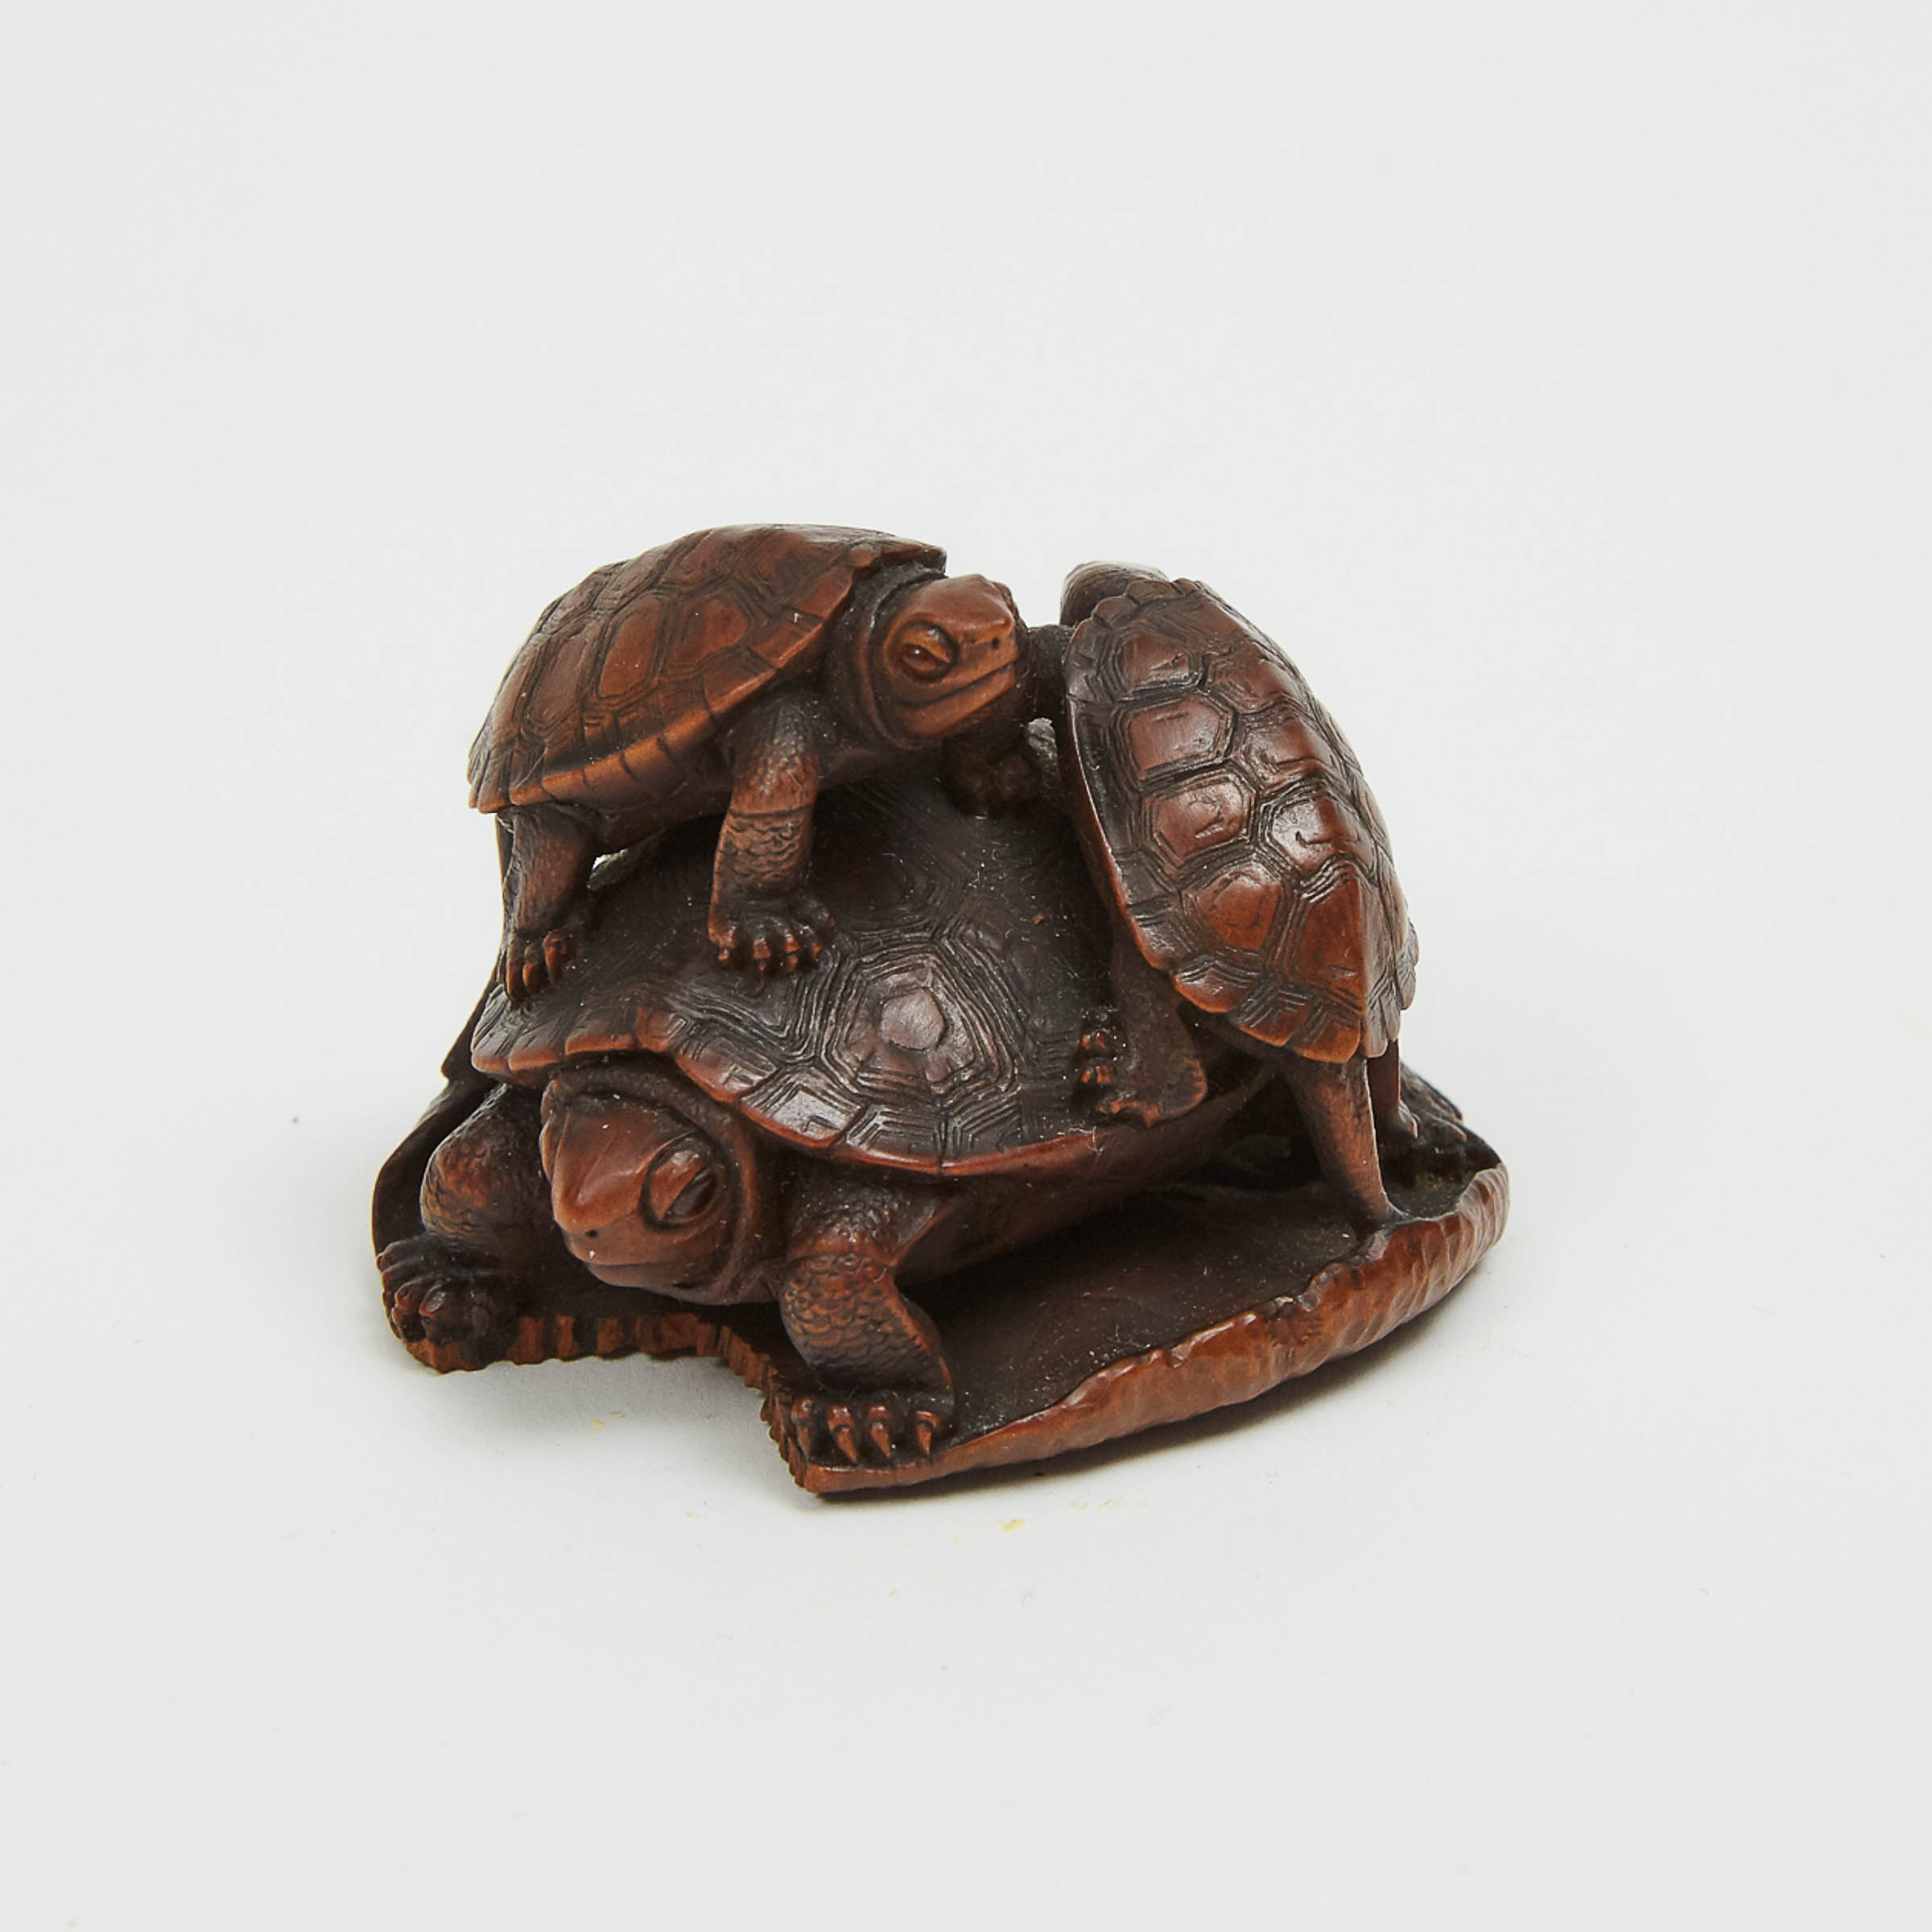 A Boxwood Netsuke of Turtles, Signed Bazan, 19th Century